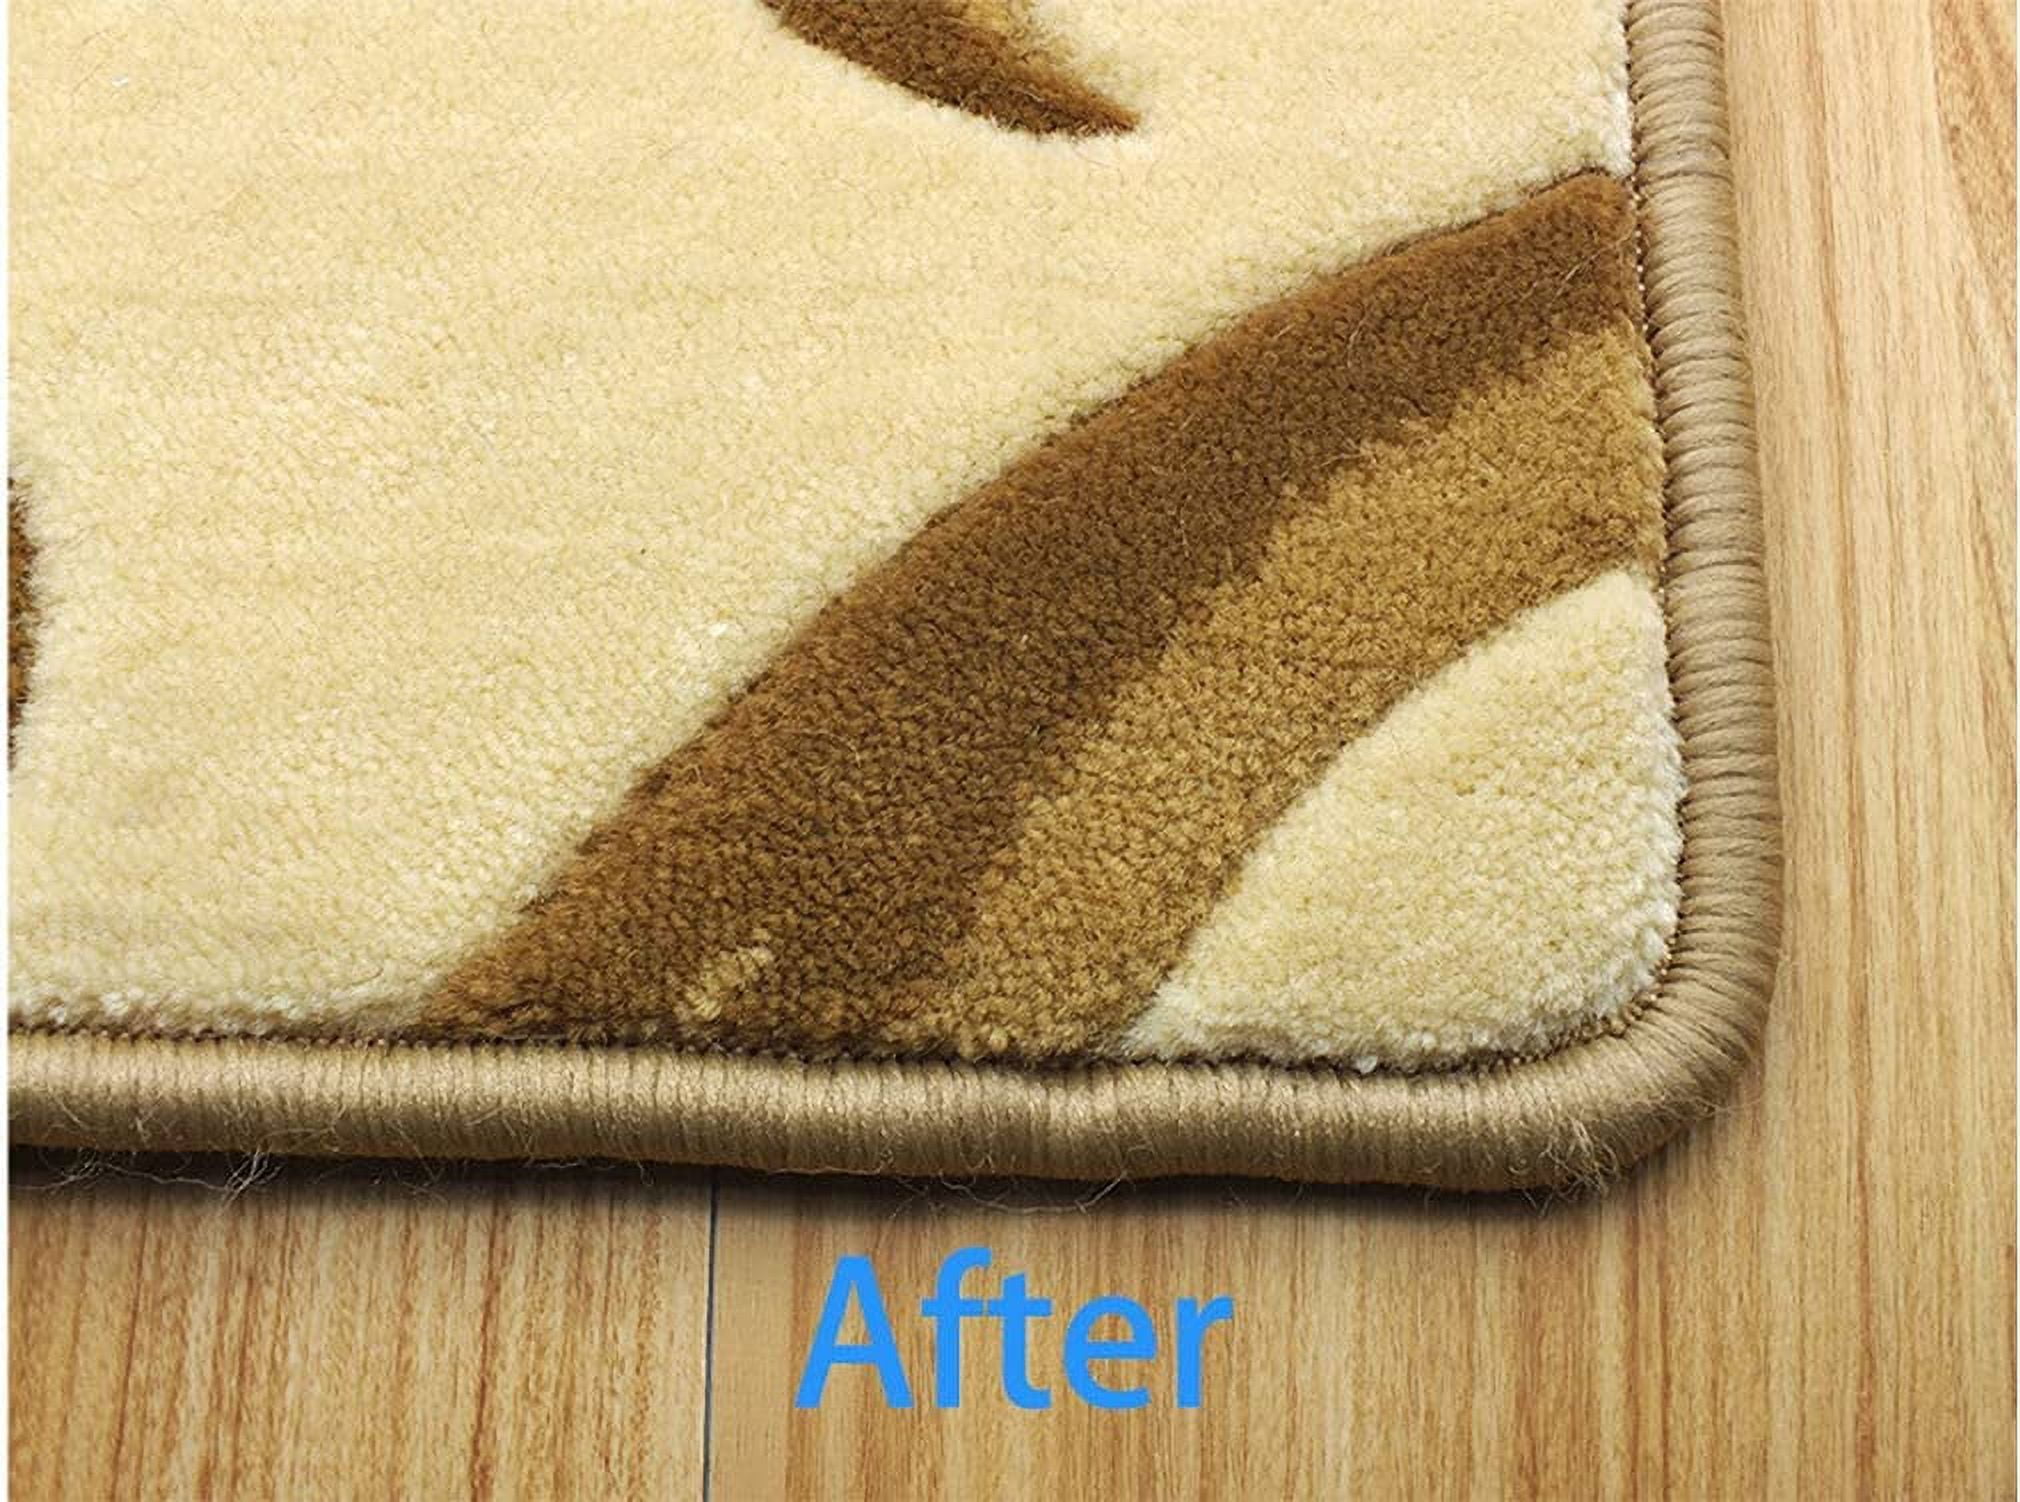 Yorwe Rug Anchors Carpet Hook and Loop Non-Slip Mat Anti-Skid Stickers Rectangle (12pcs, Black)